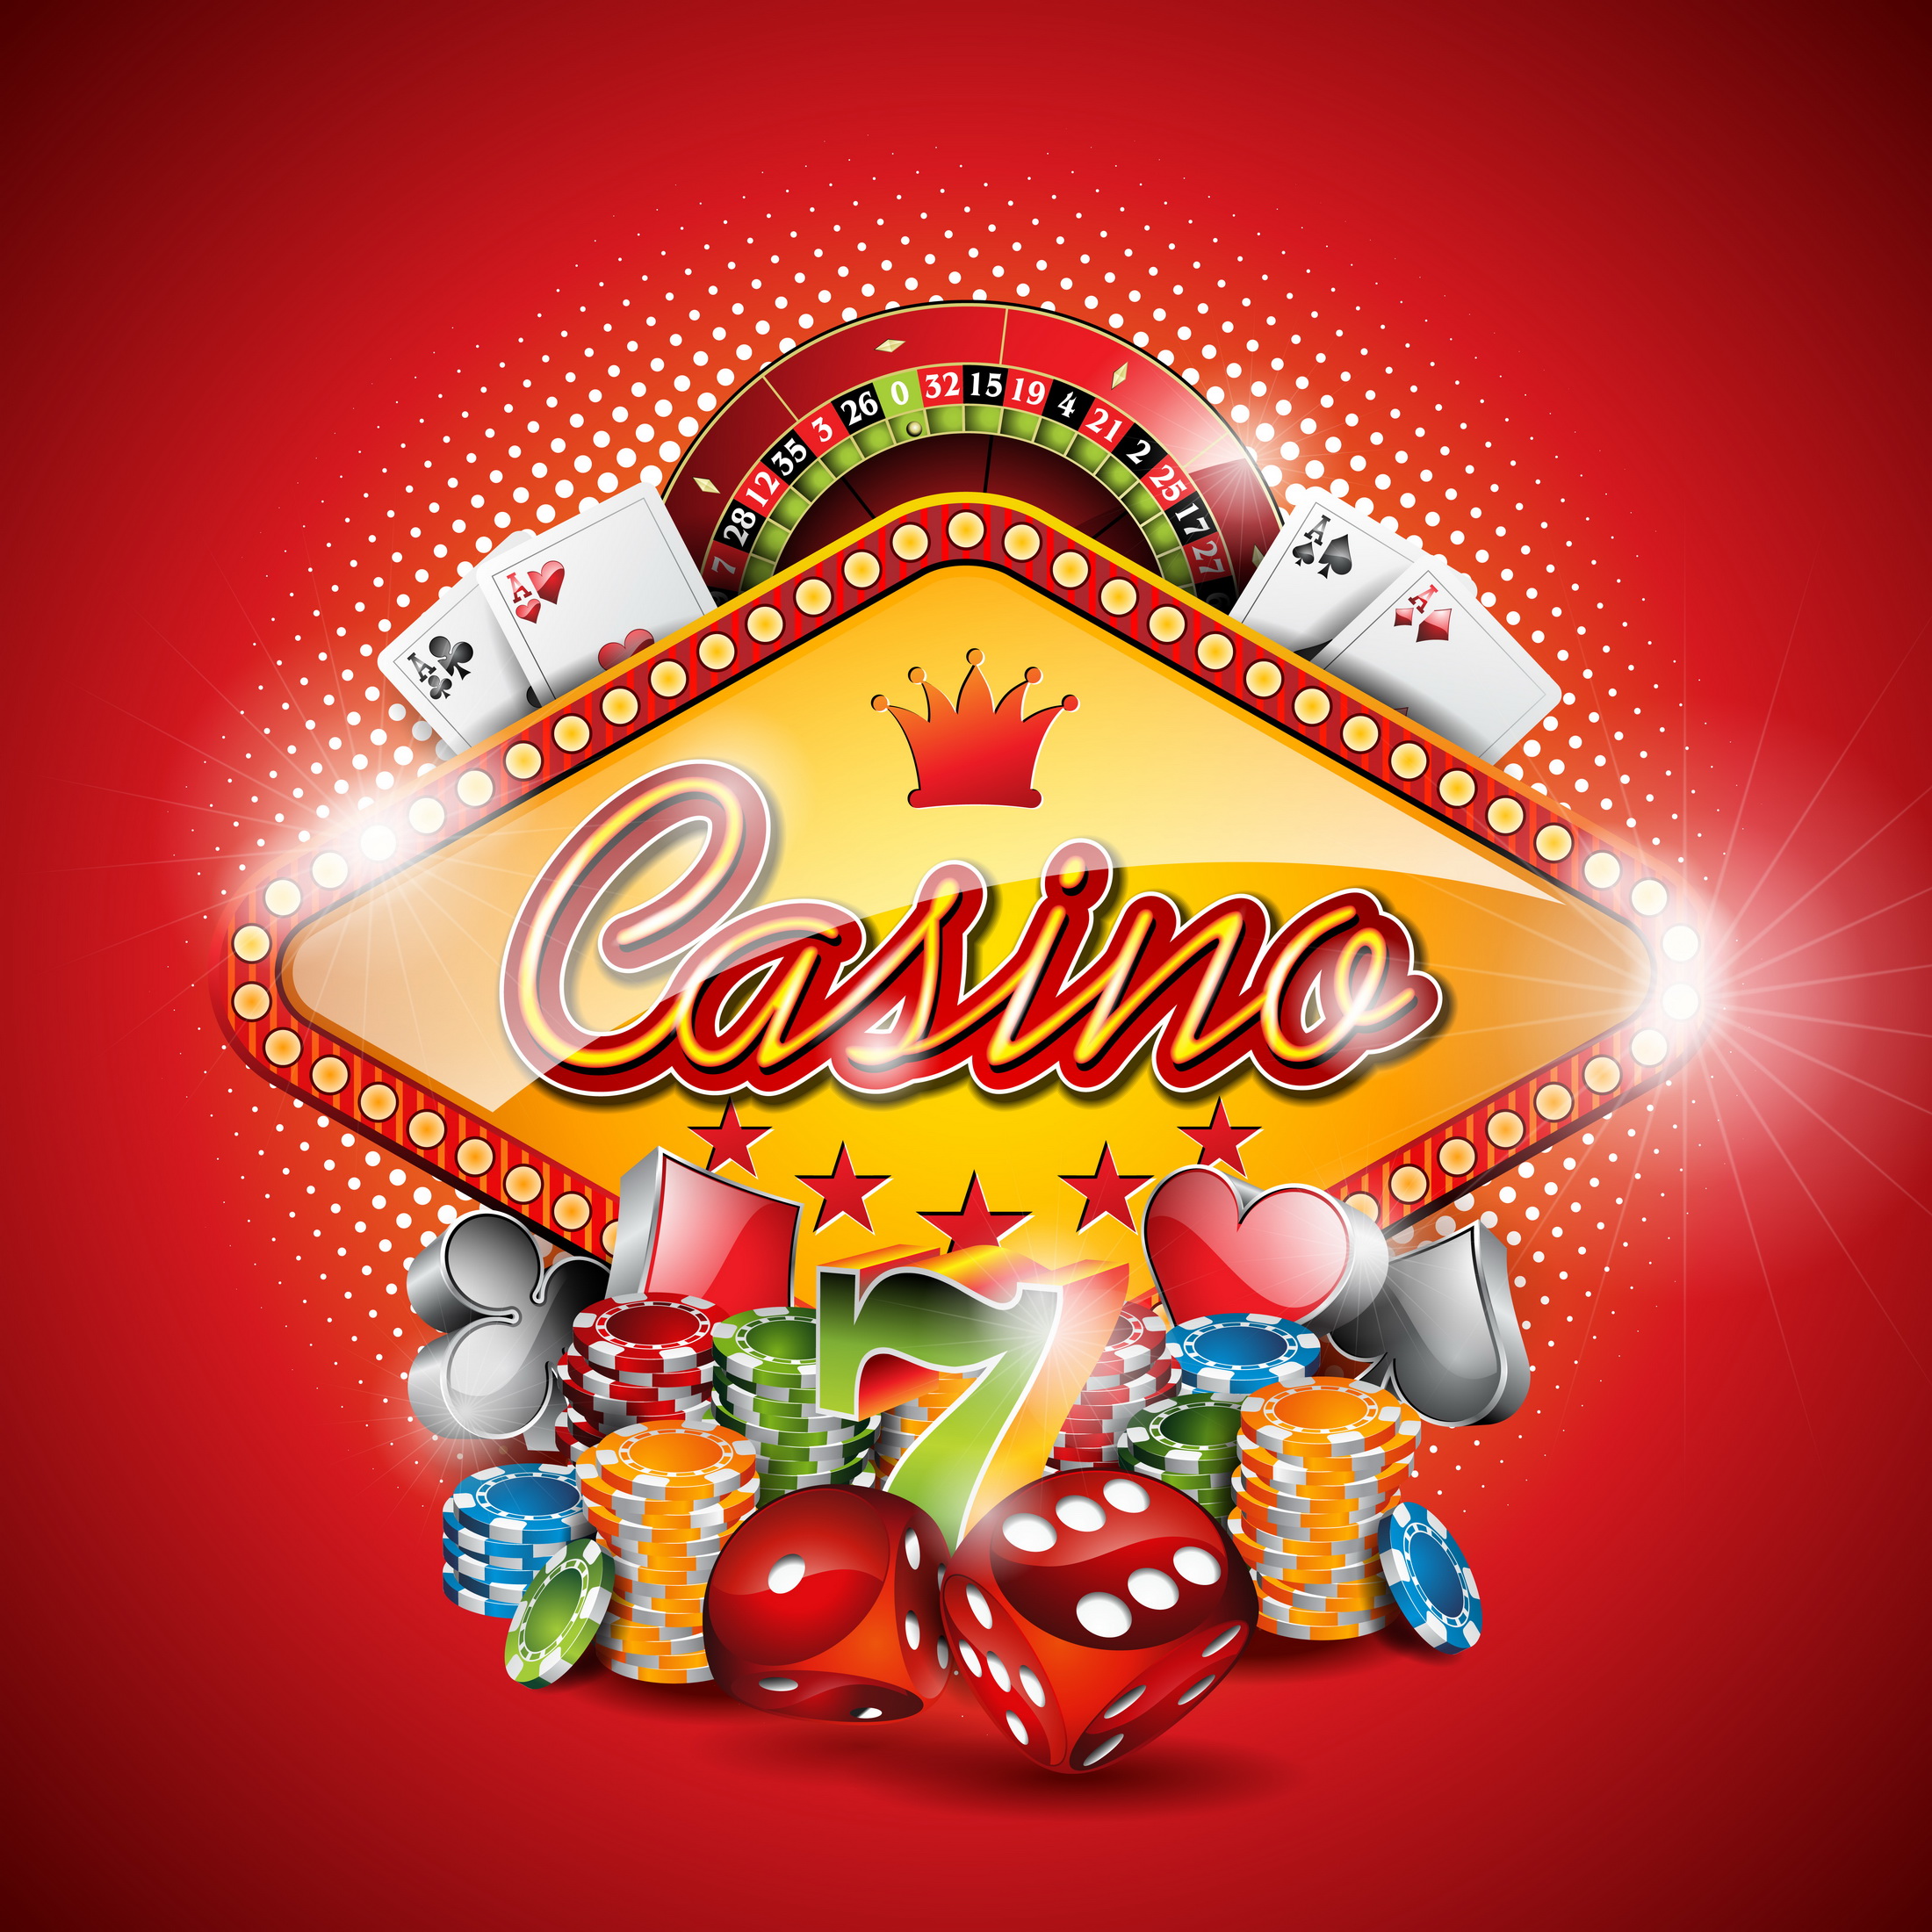 casino online europa